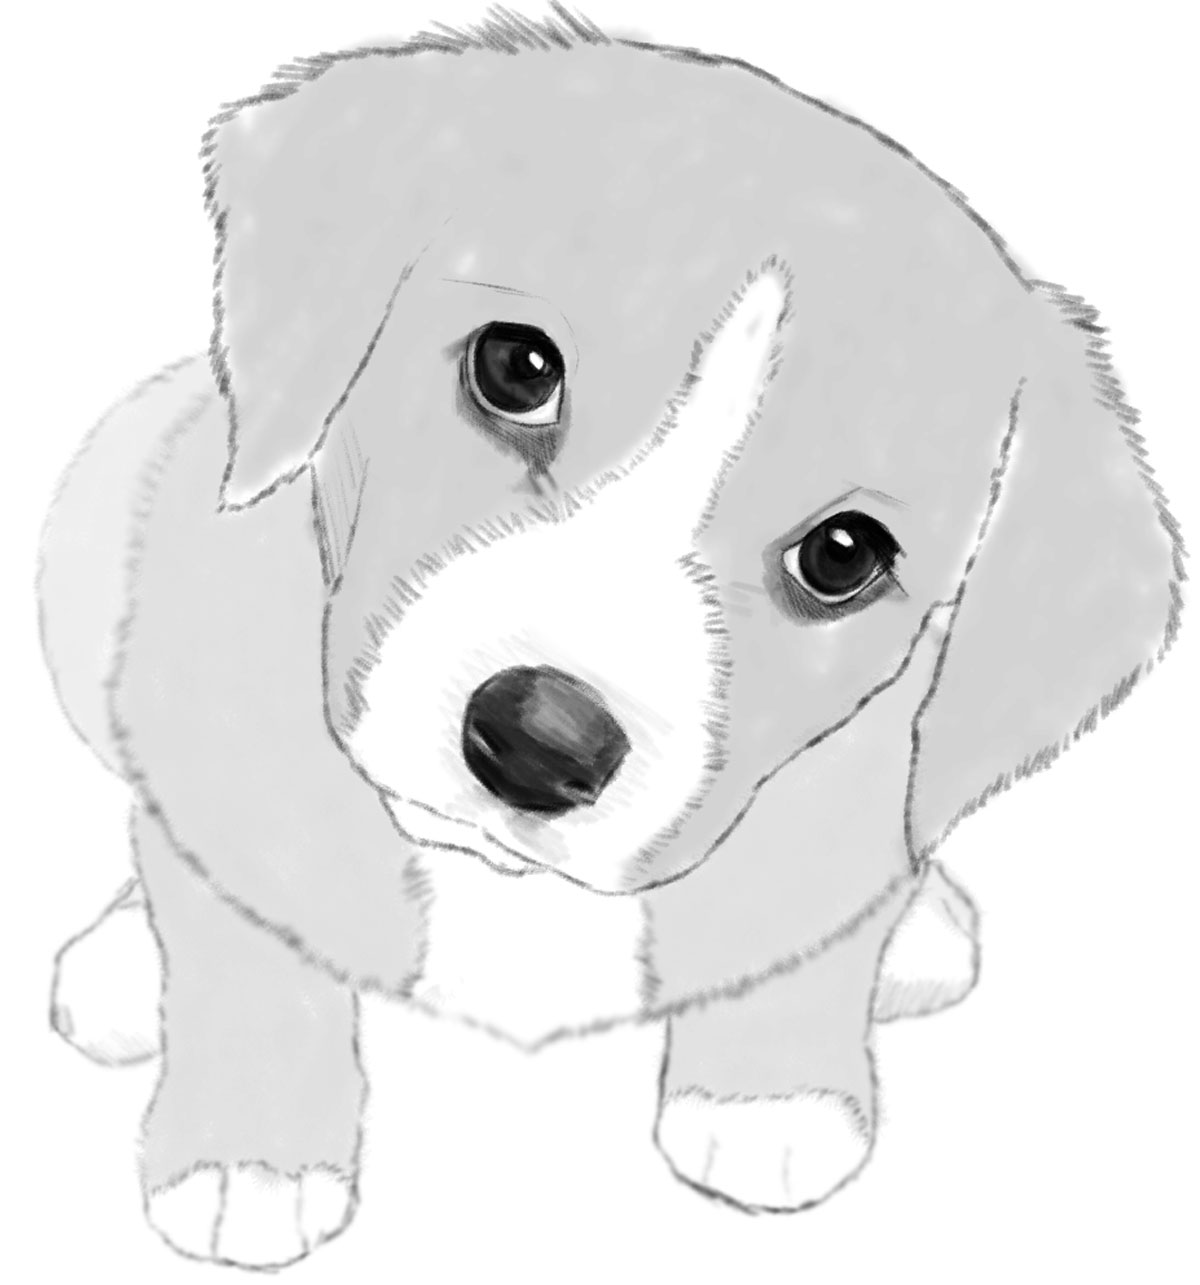 How to Draw Puppy CUTE - Easy | BOBO Cute Art - YouTube